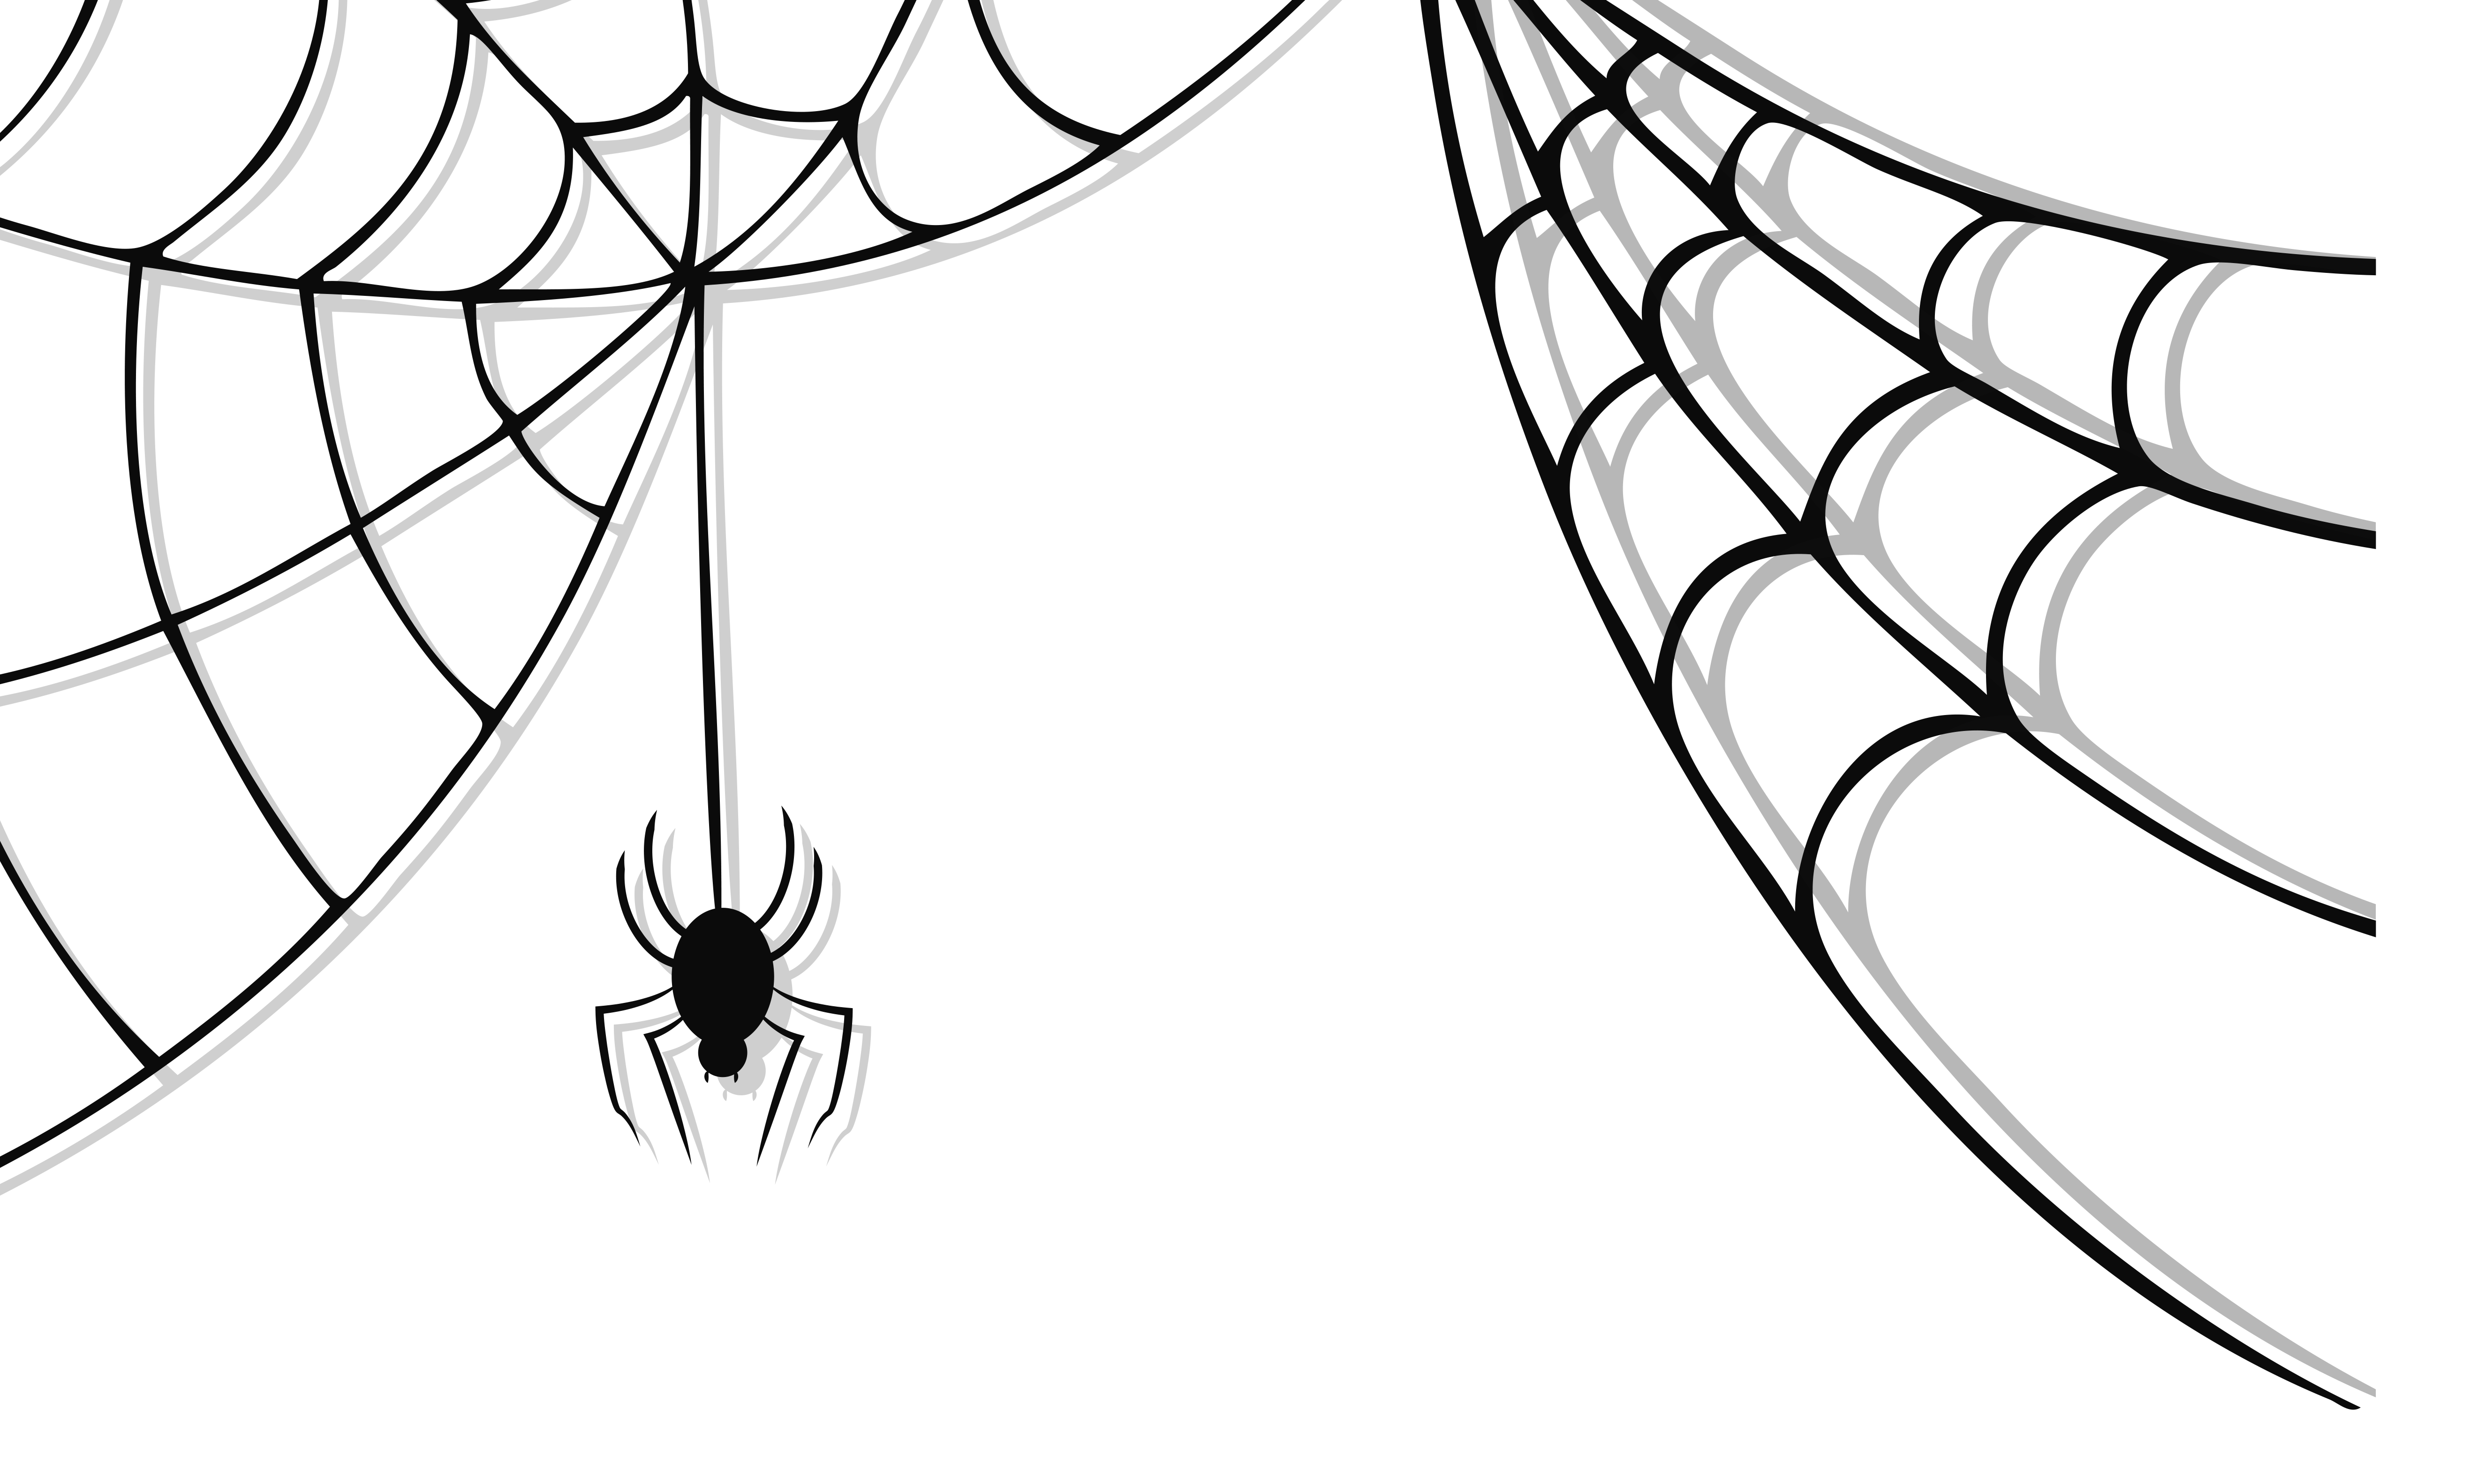 Cartoon spider web clipart - 